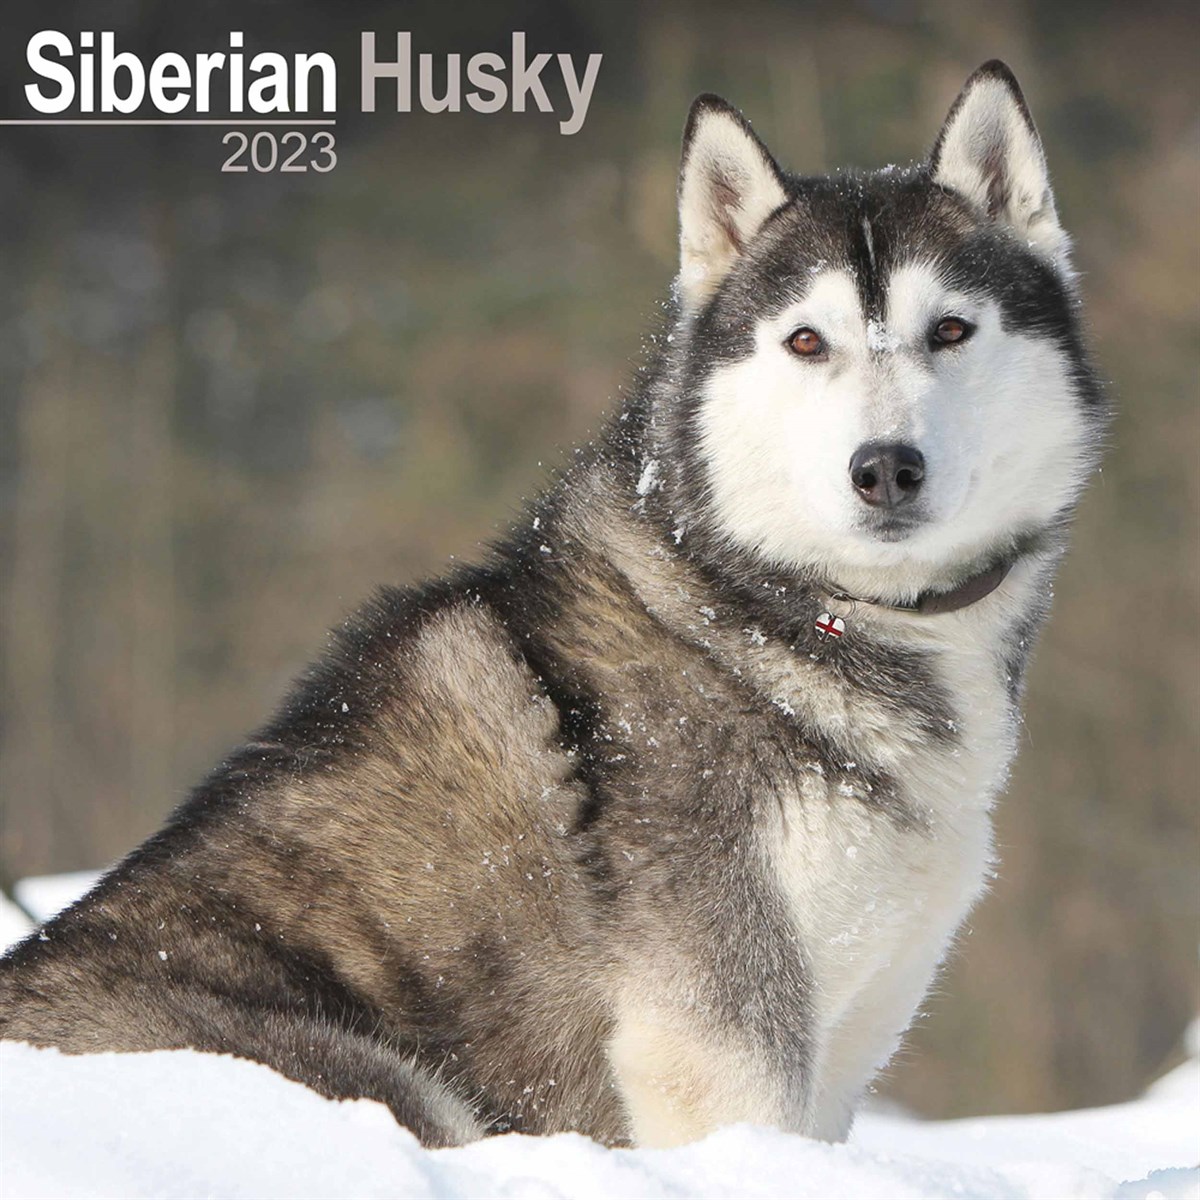 Siberian Husky 2023 Calendars